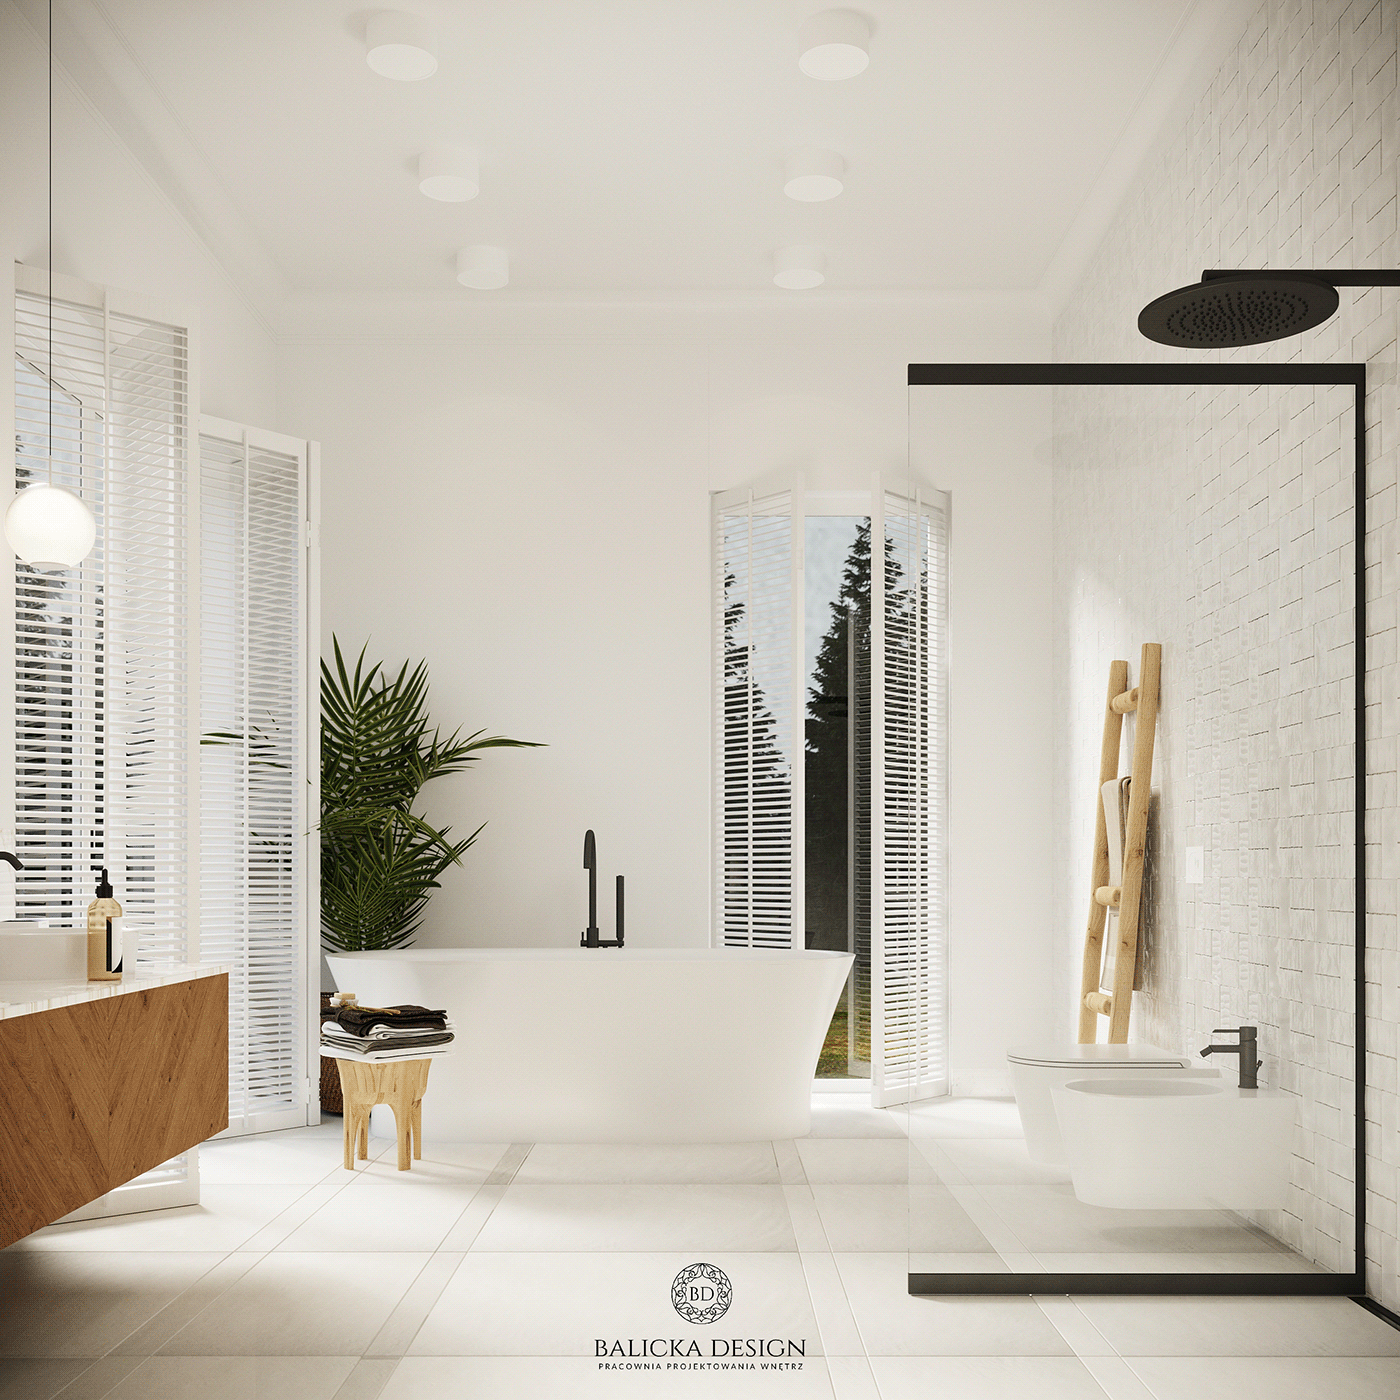 design interior design  balicka design bathroom bright cozy Sunny feminine tranquility